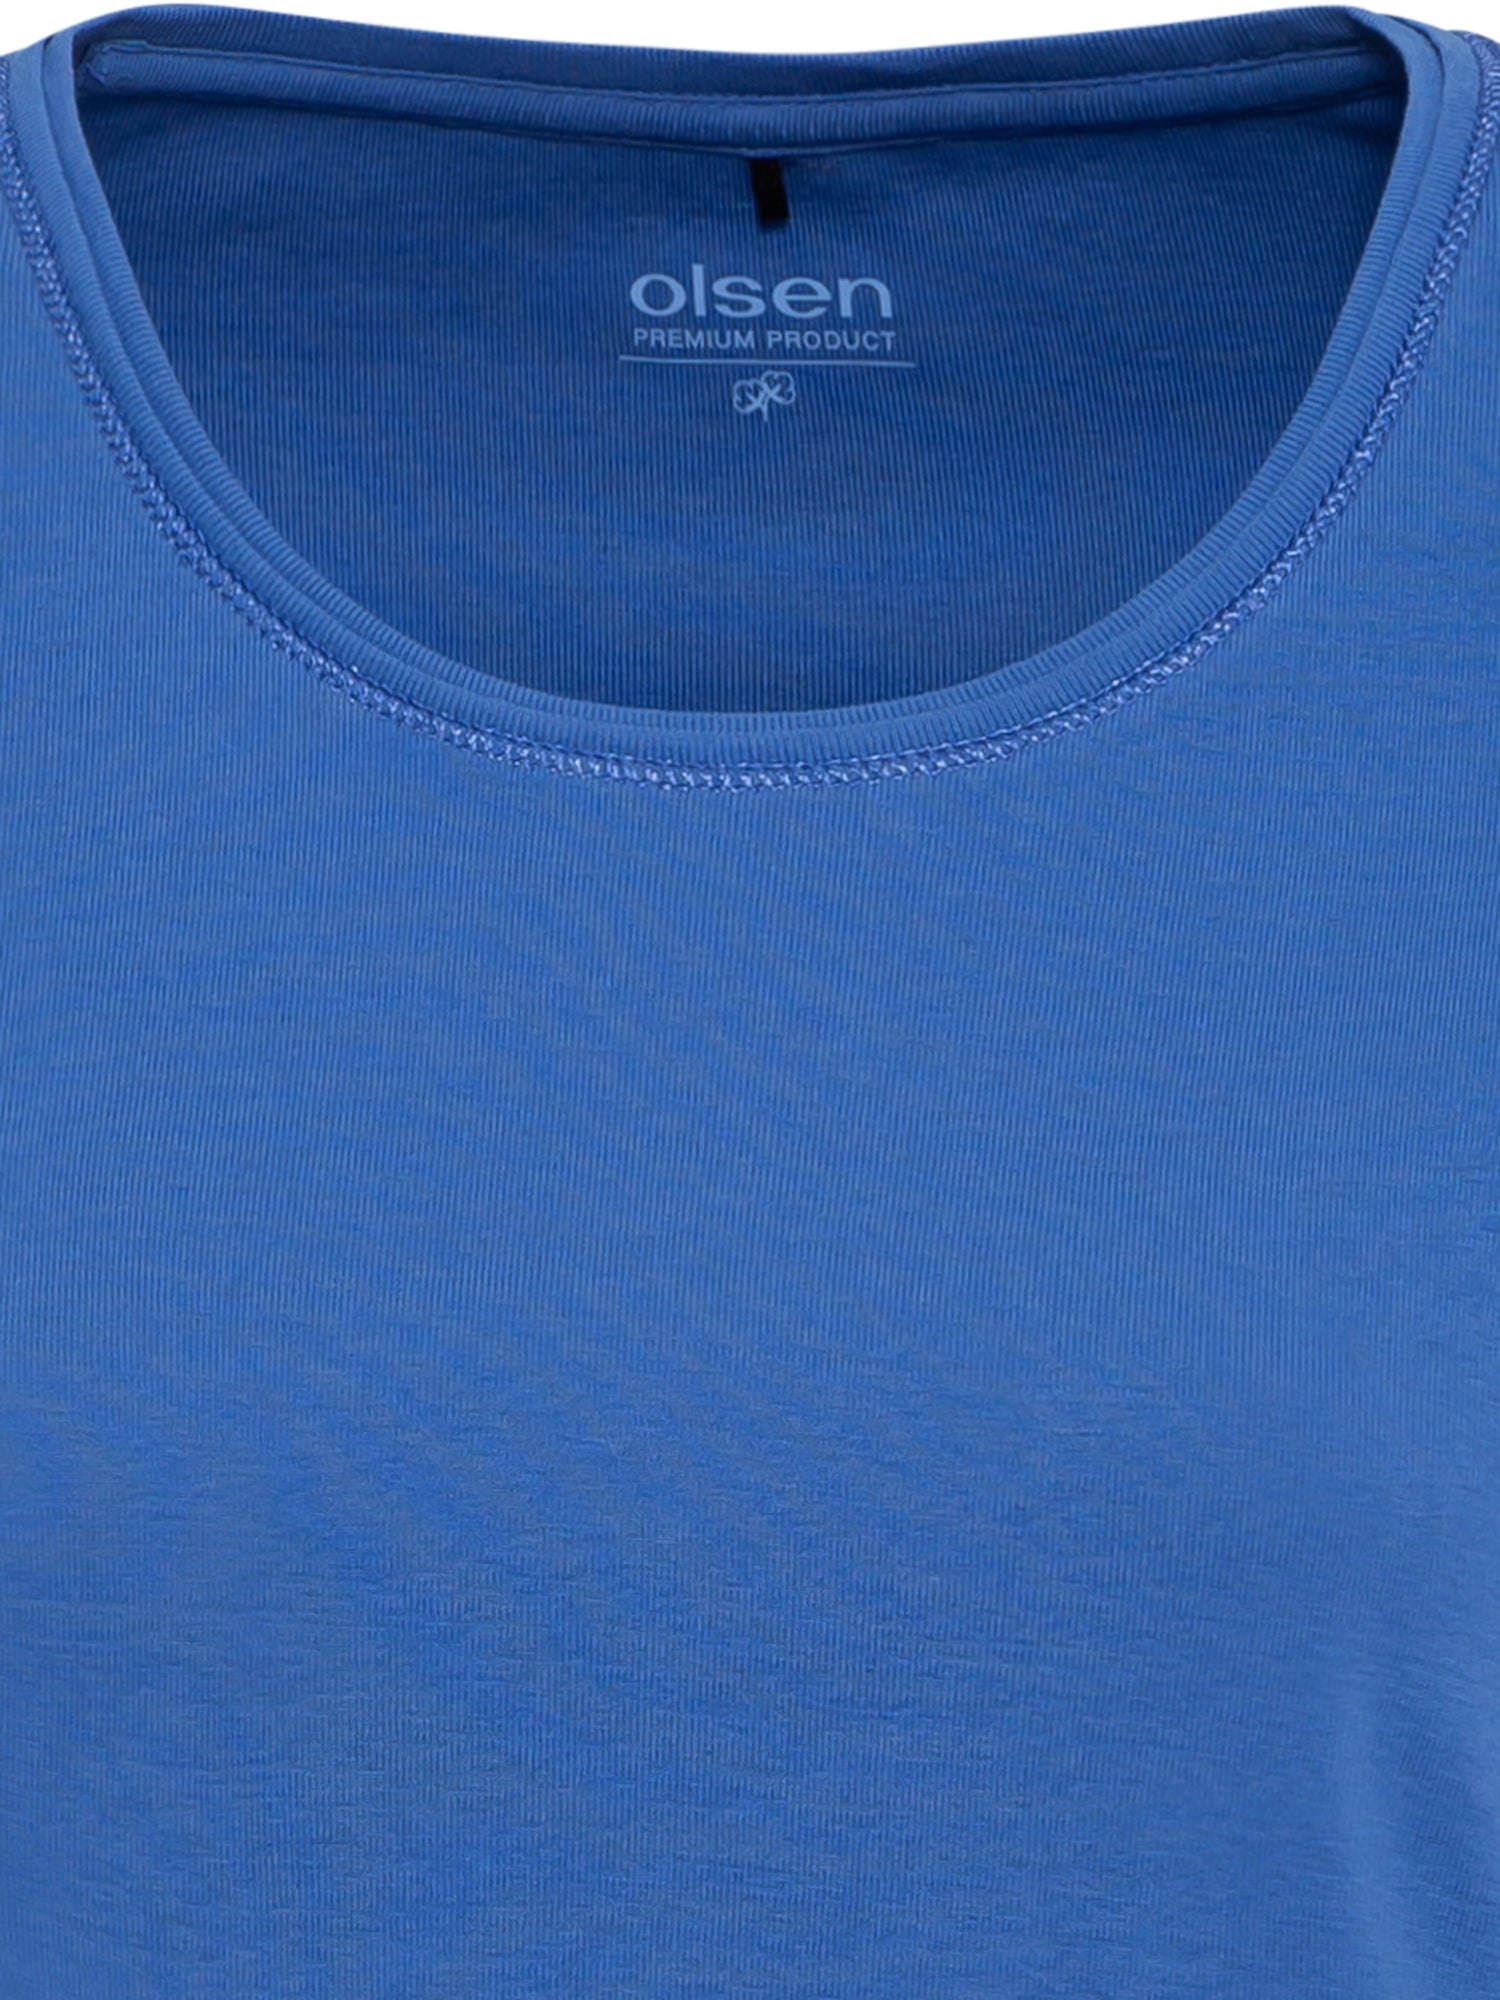 Olsen  - Blue Long Sleeve Round Neck Tee